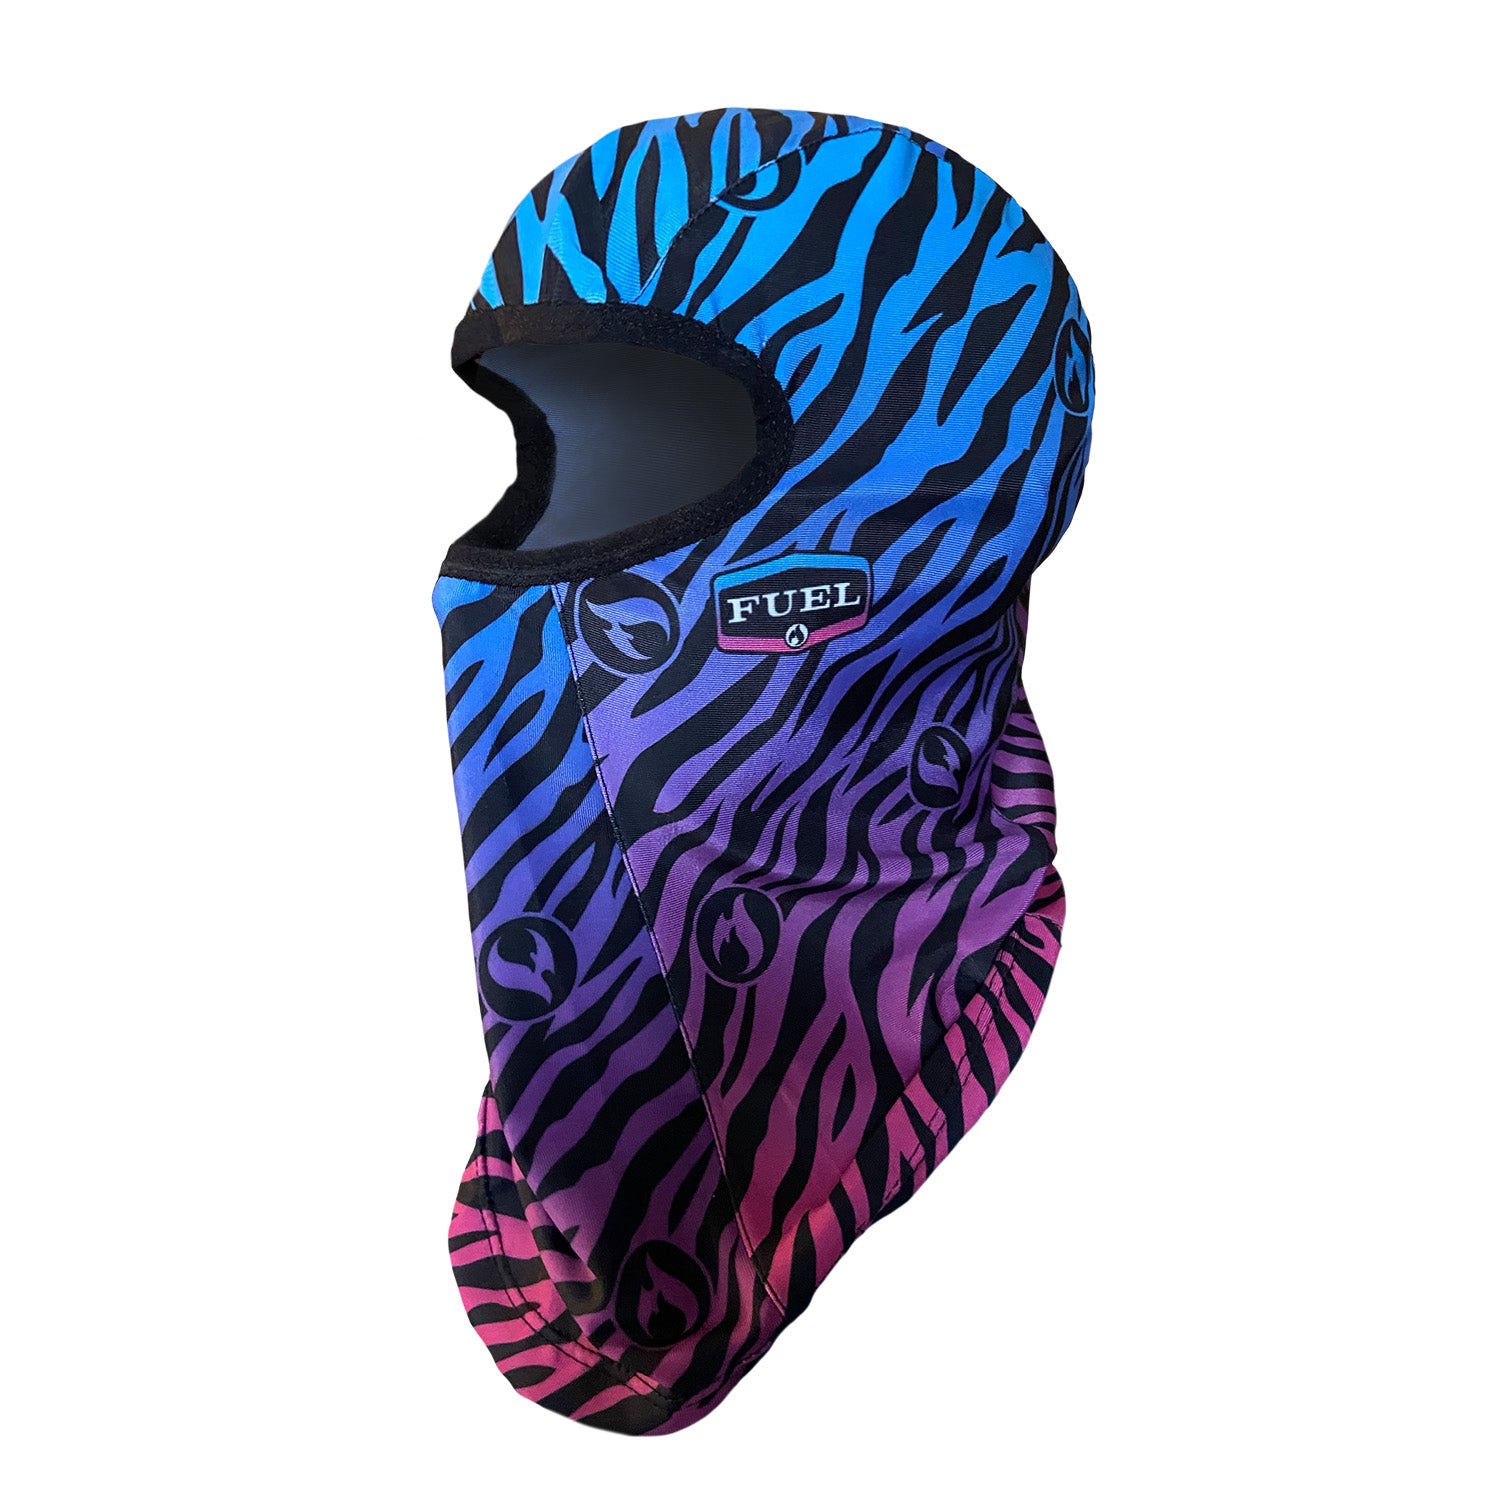 Sublimated Ski Mask - Tiger Face, Front and back print